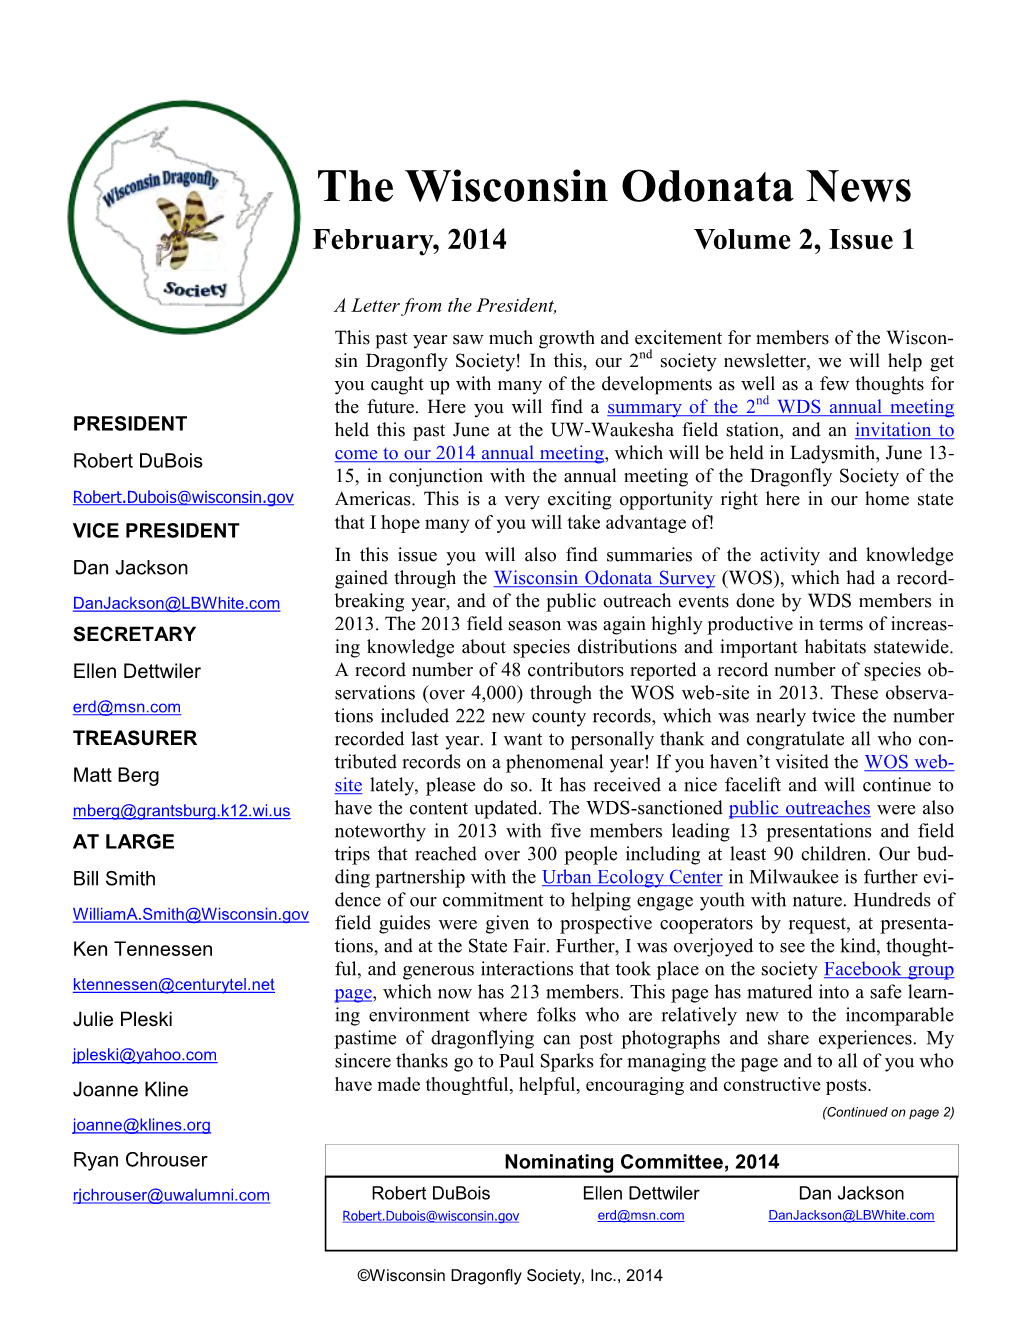 The Wisconsin Odonata News February, 2014 Volume 2, Issue 1